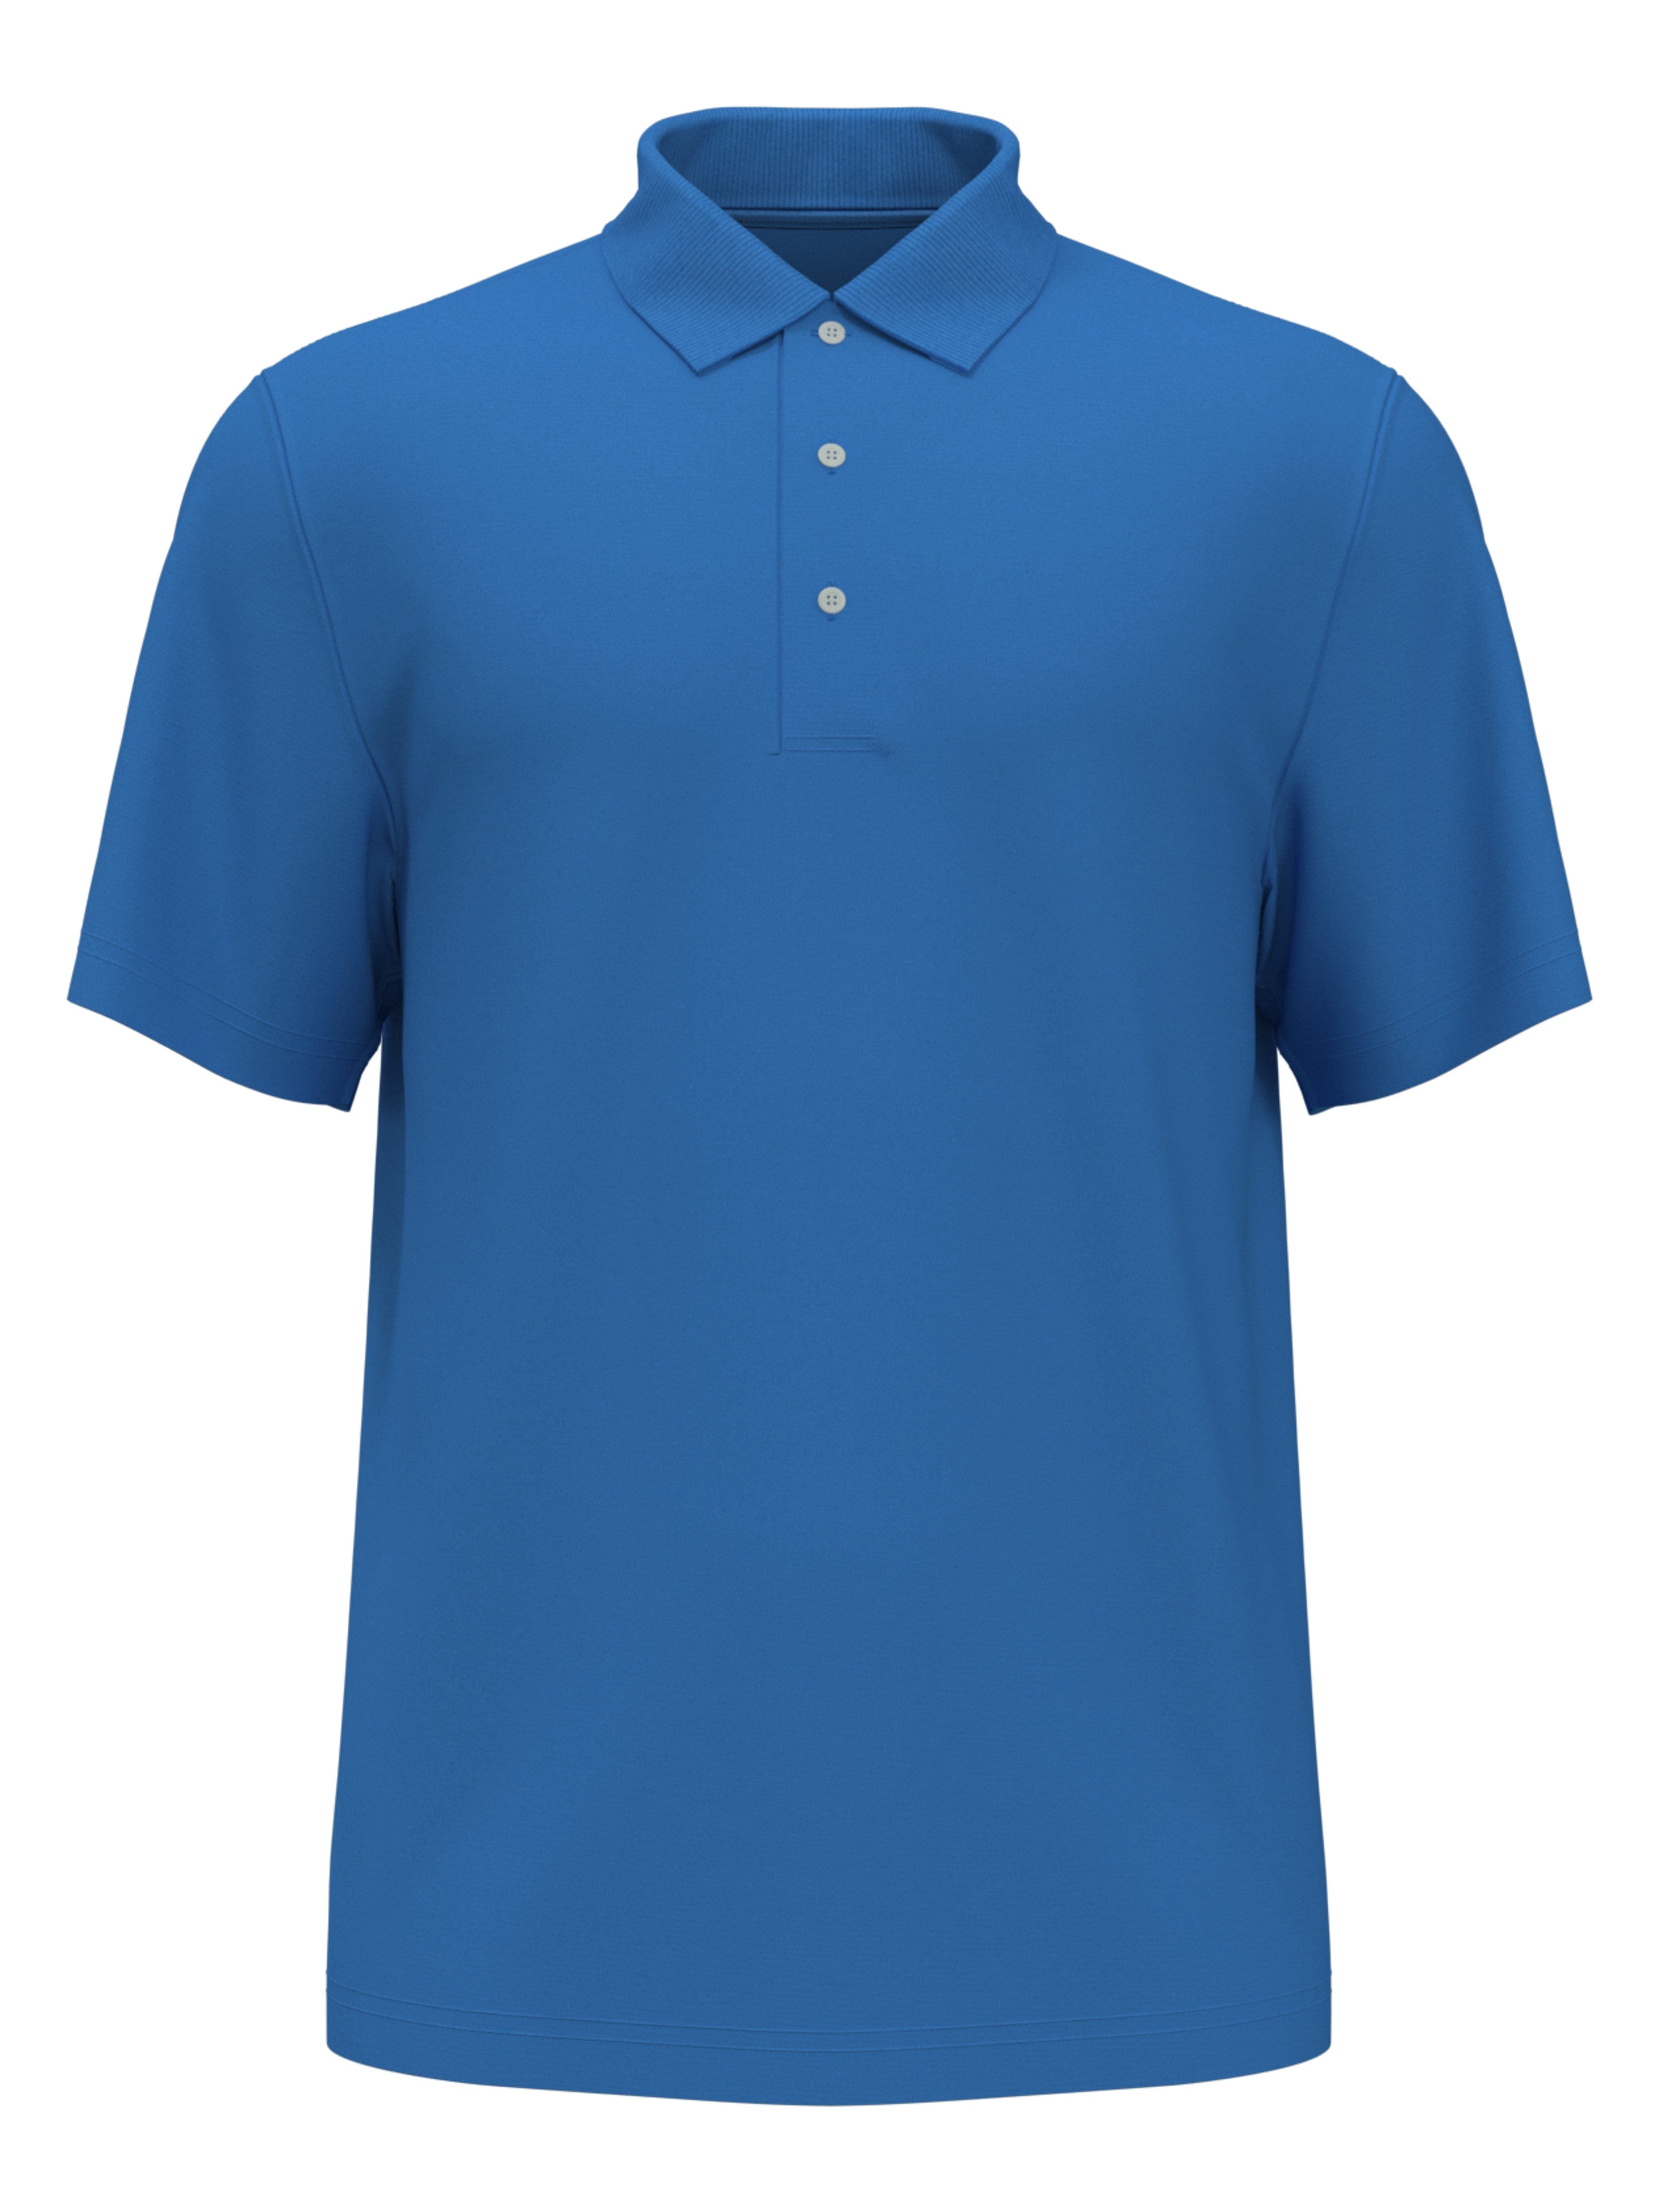 PGA TOUR Apparel Boys Short Sleeve AirFlux™ Polo Shirt, Size Large, Super Sonic Blue, 100% Polyester | Golf Apparel Shop